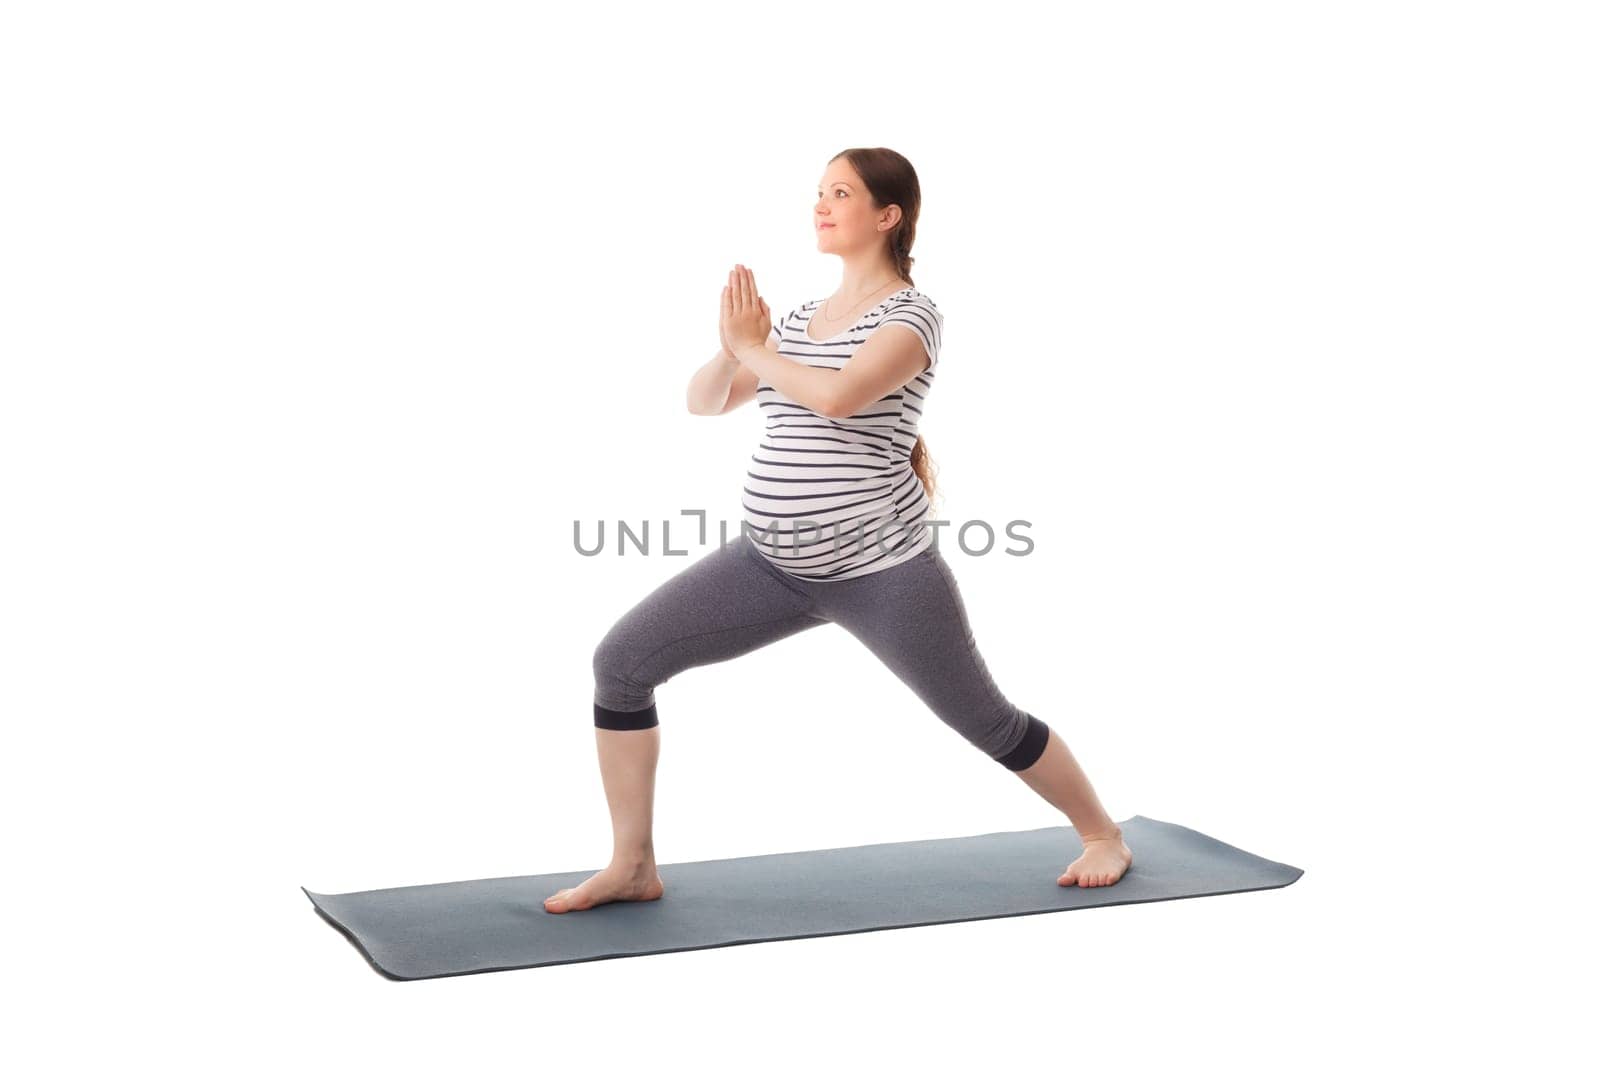 Pregnant woman doing yoga asana Virabhadrasana 1 by dimol